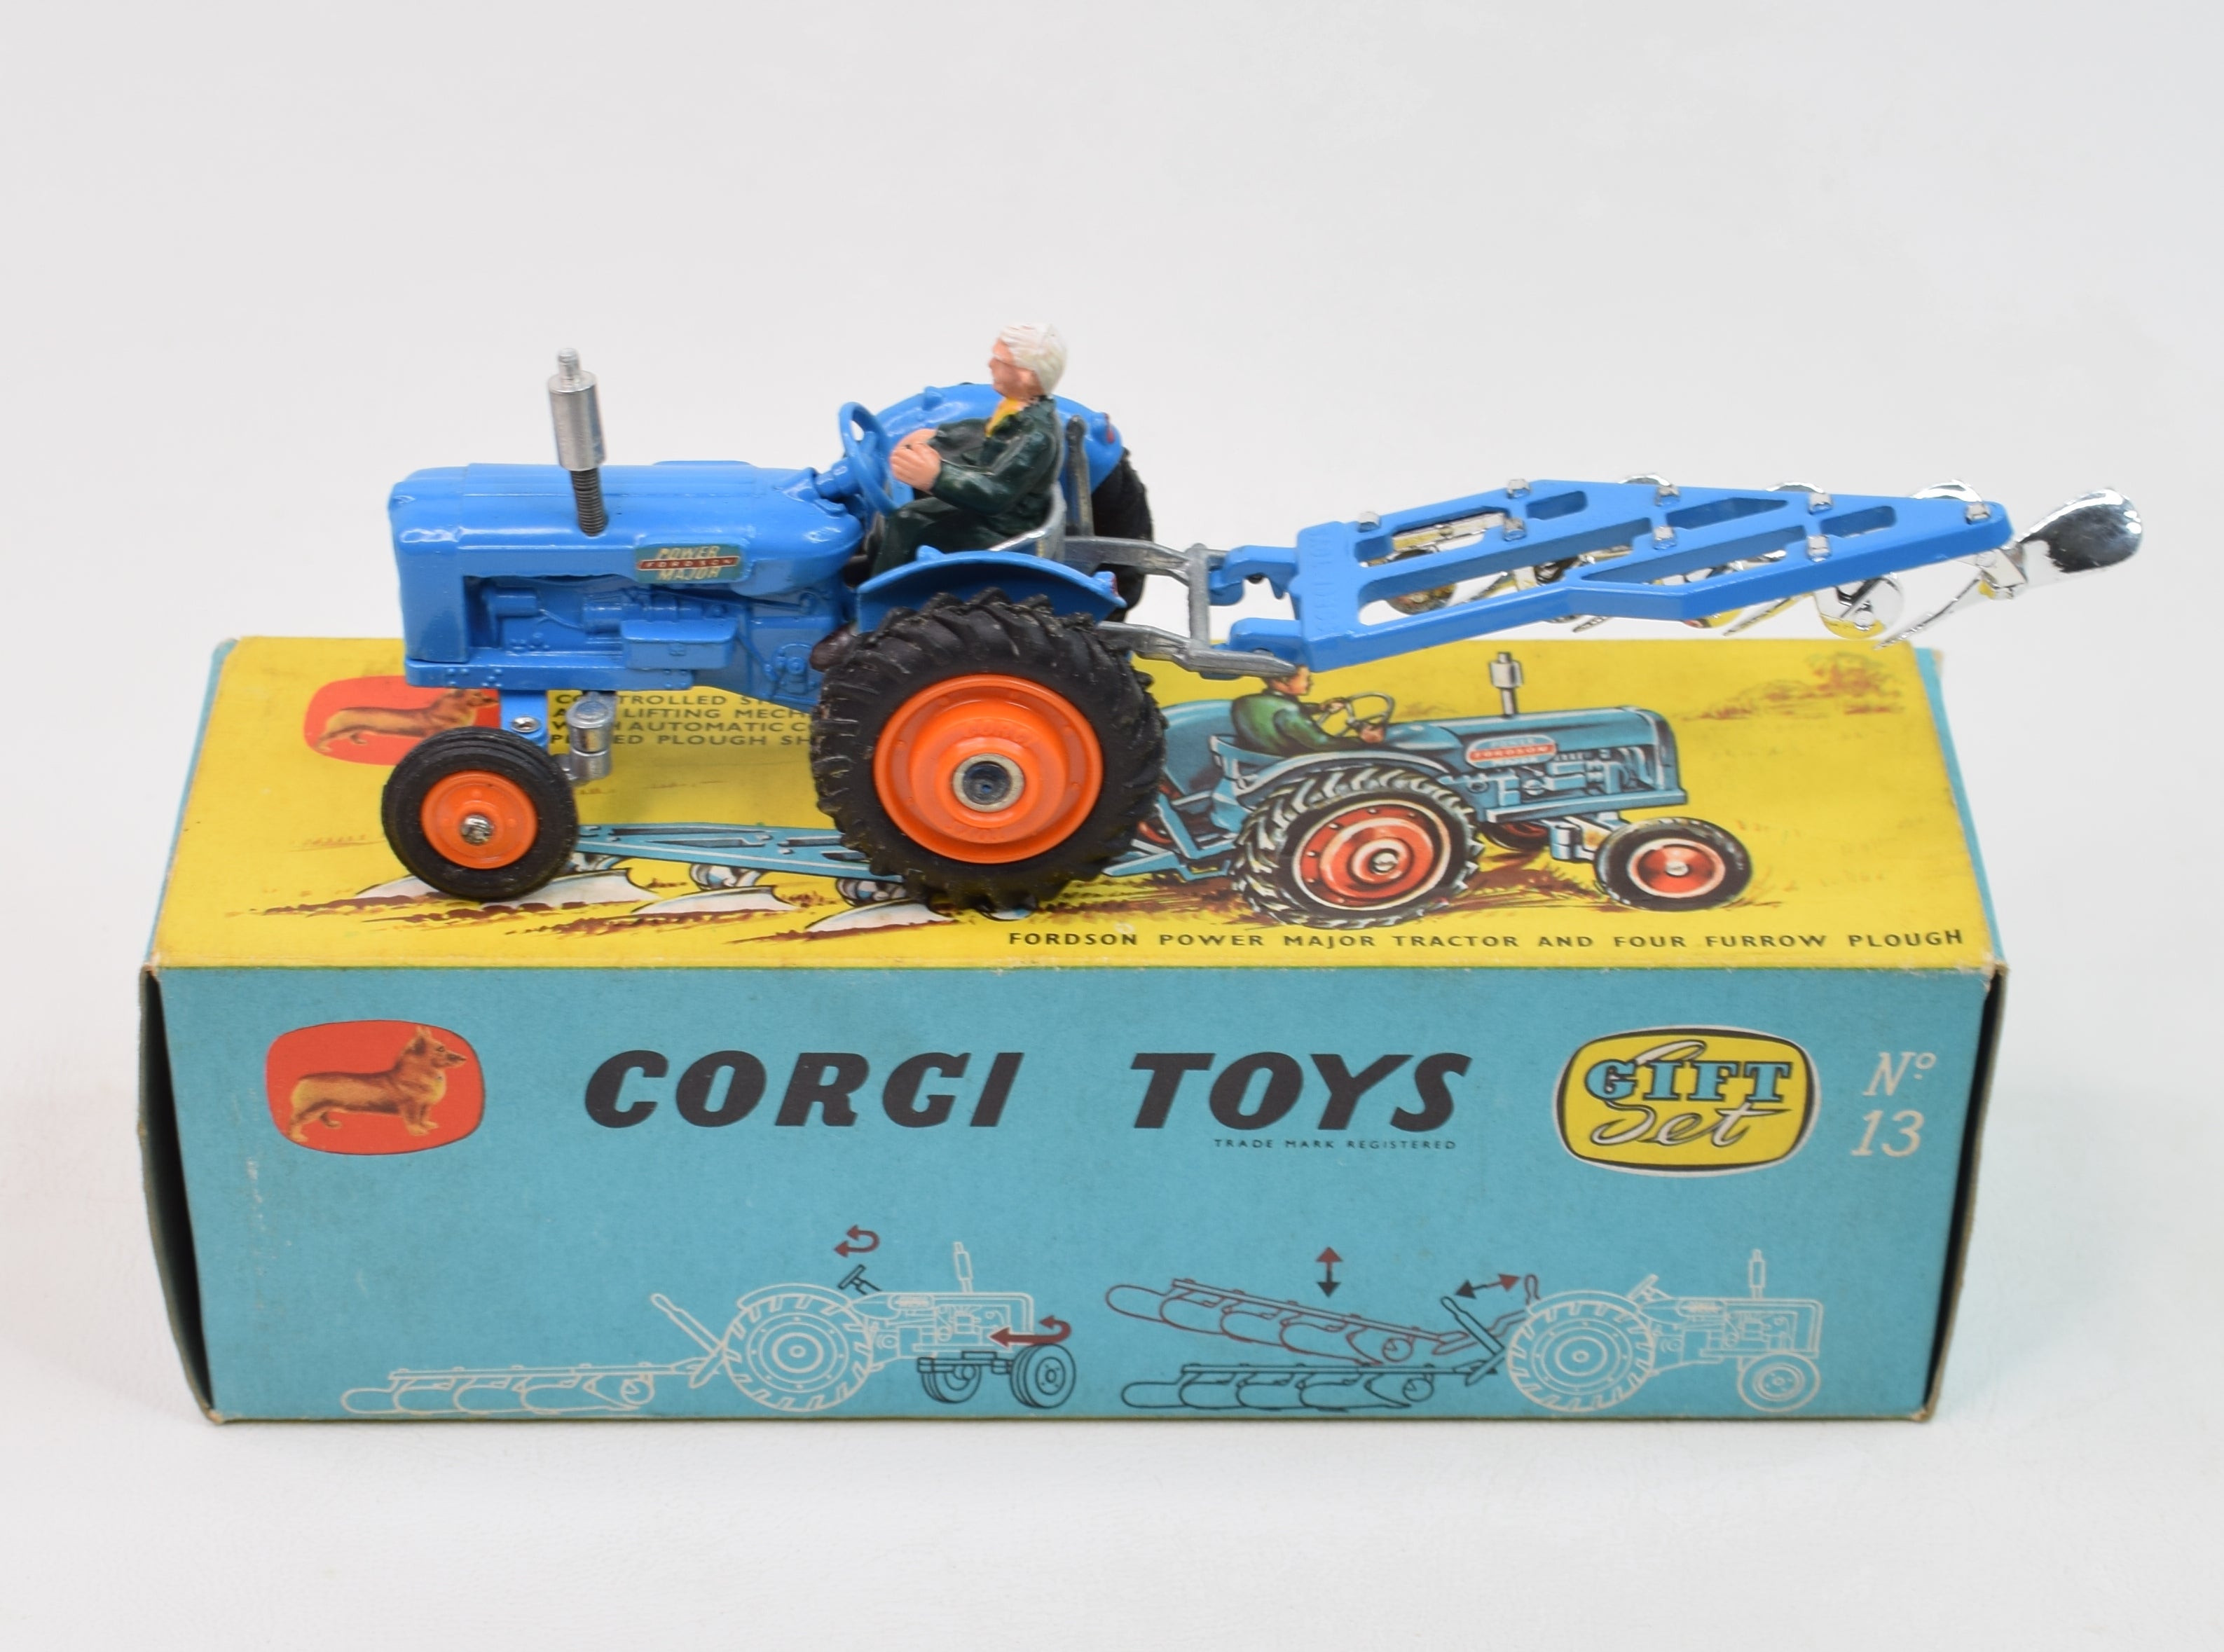 Corgi Toys Gift Set 13 Fordson Power Major Tractor with Plough